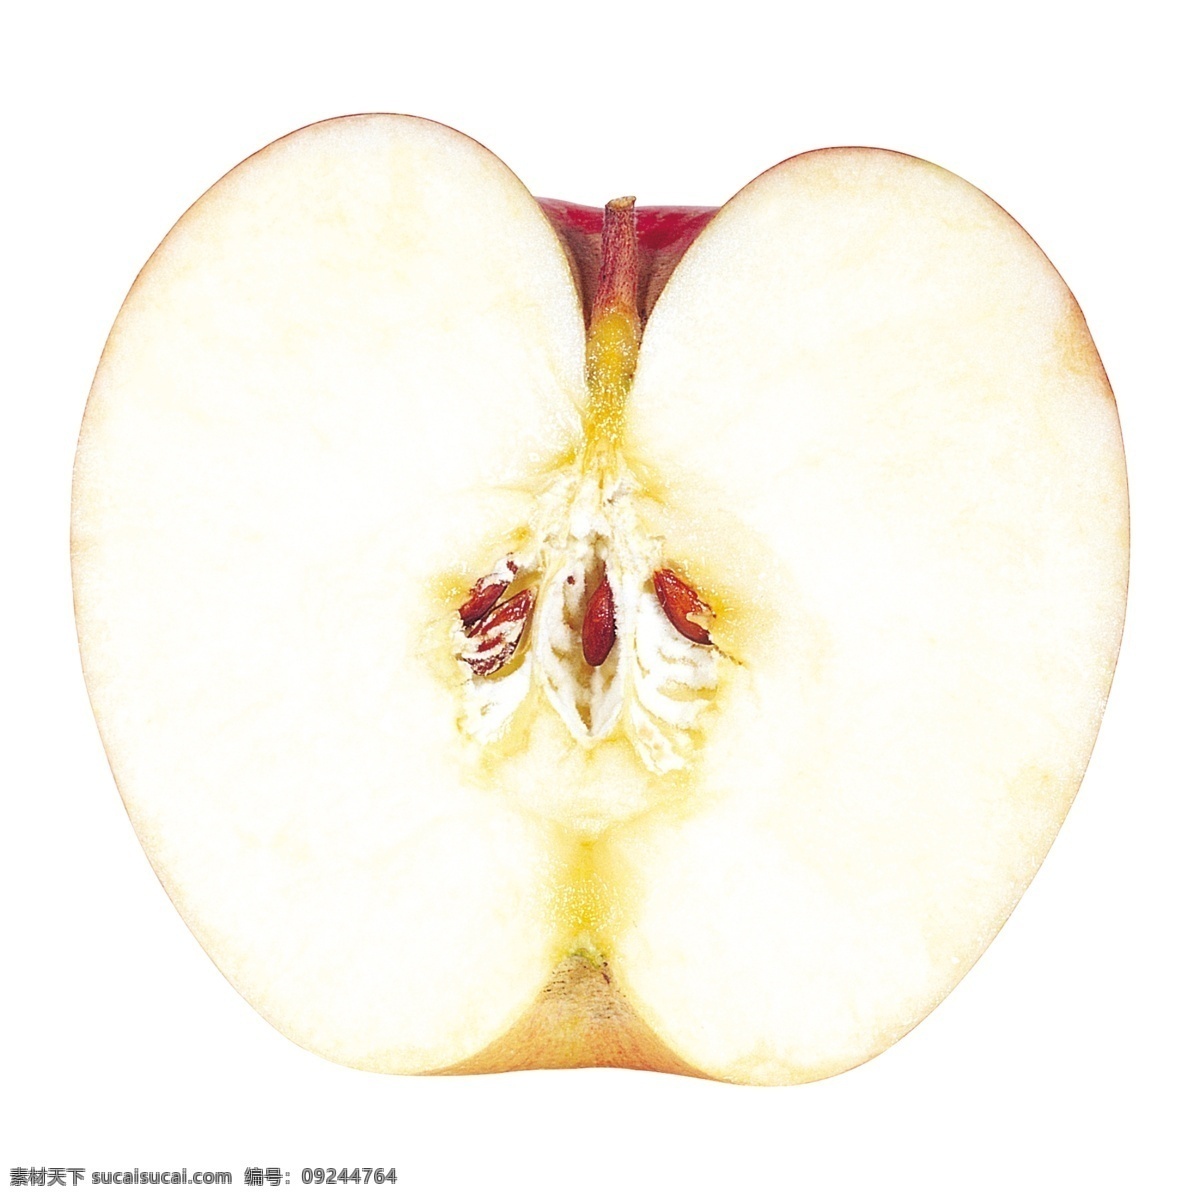 apple 分层 创意水果 高清 红苹果 进口水果 美味 苹果 苹果素材下载 苹果模板下载 切开的苹果 一半苹果 果核 水果静物 水果 营养 新鲜 新鲜水果 特写 生物世界 源文件 psd源文件